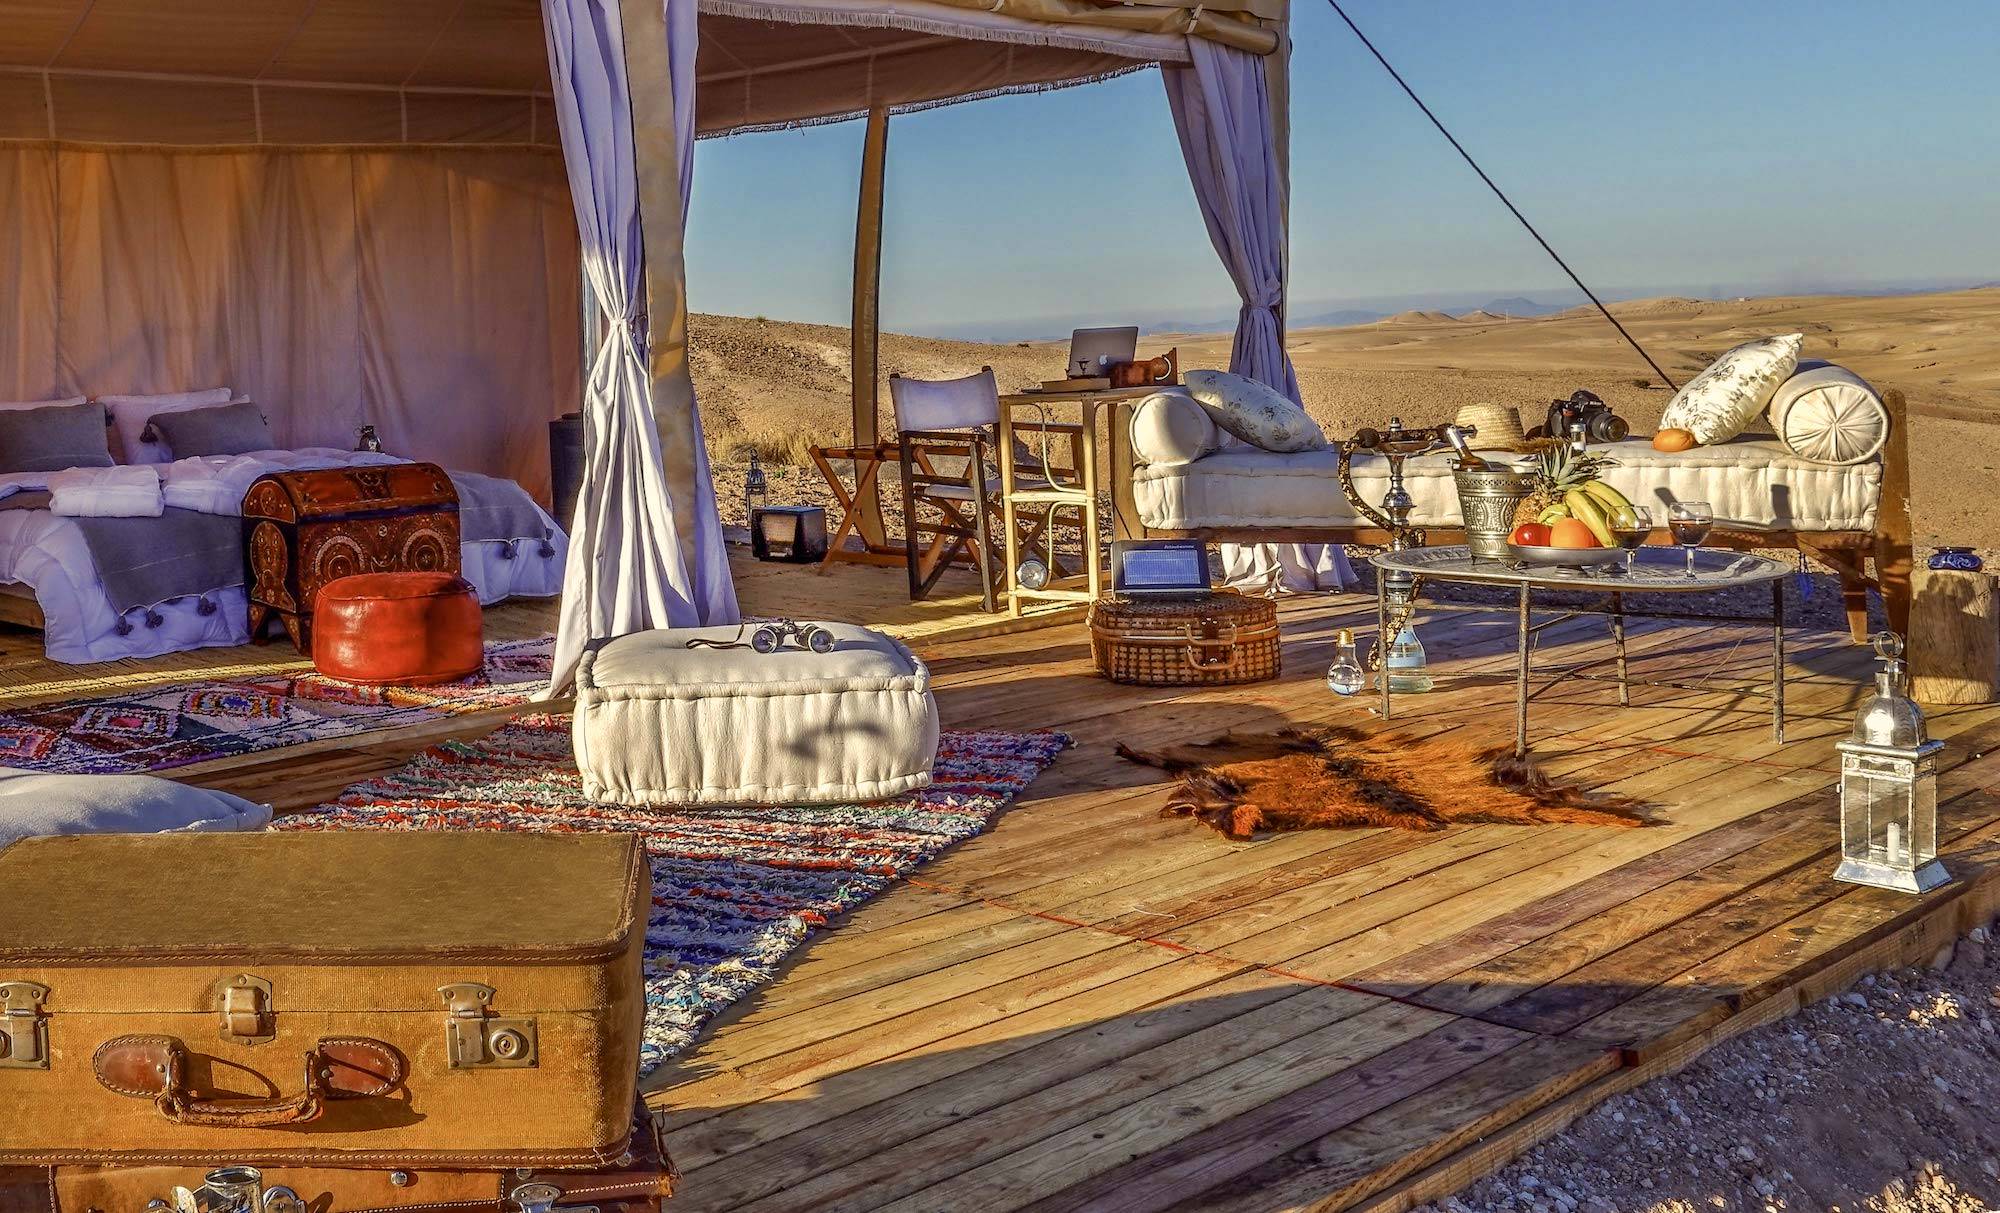 Gallerie | Agafay desert luxury camp, best Marrakech glampin experience